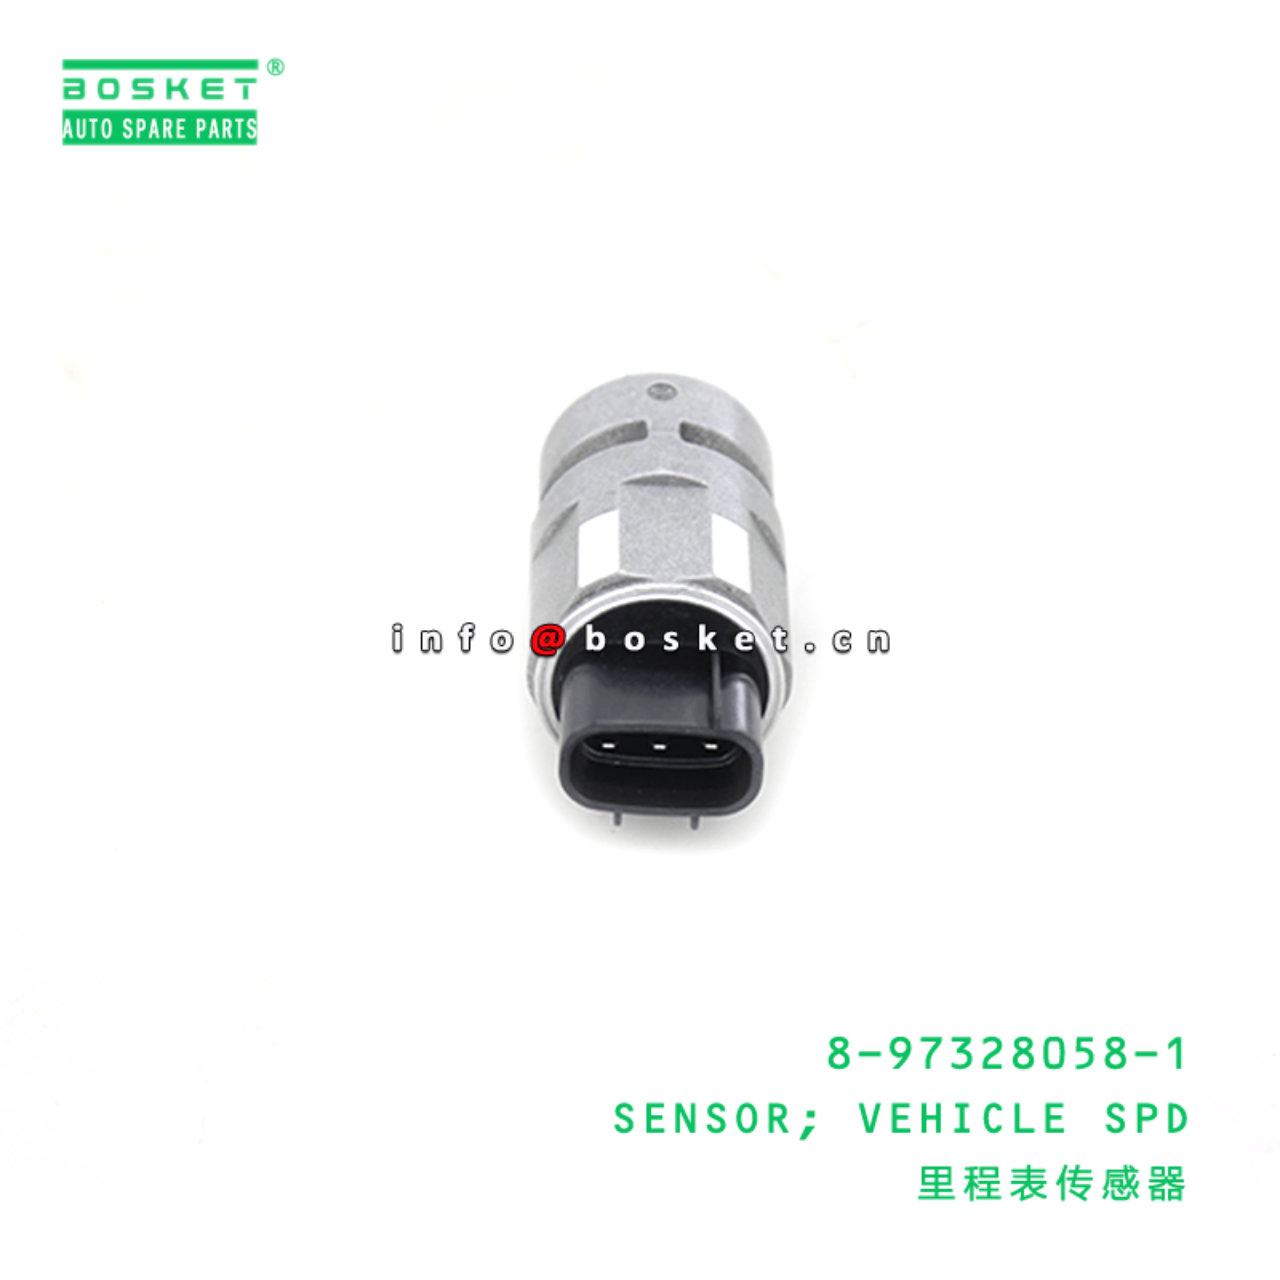 8971676190 8973280581 8-97328058-1 8-97167619-0 Vehicle Speed Sensor Suitable for ISUZU CXZ CXZ51K 6